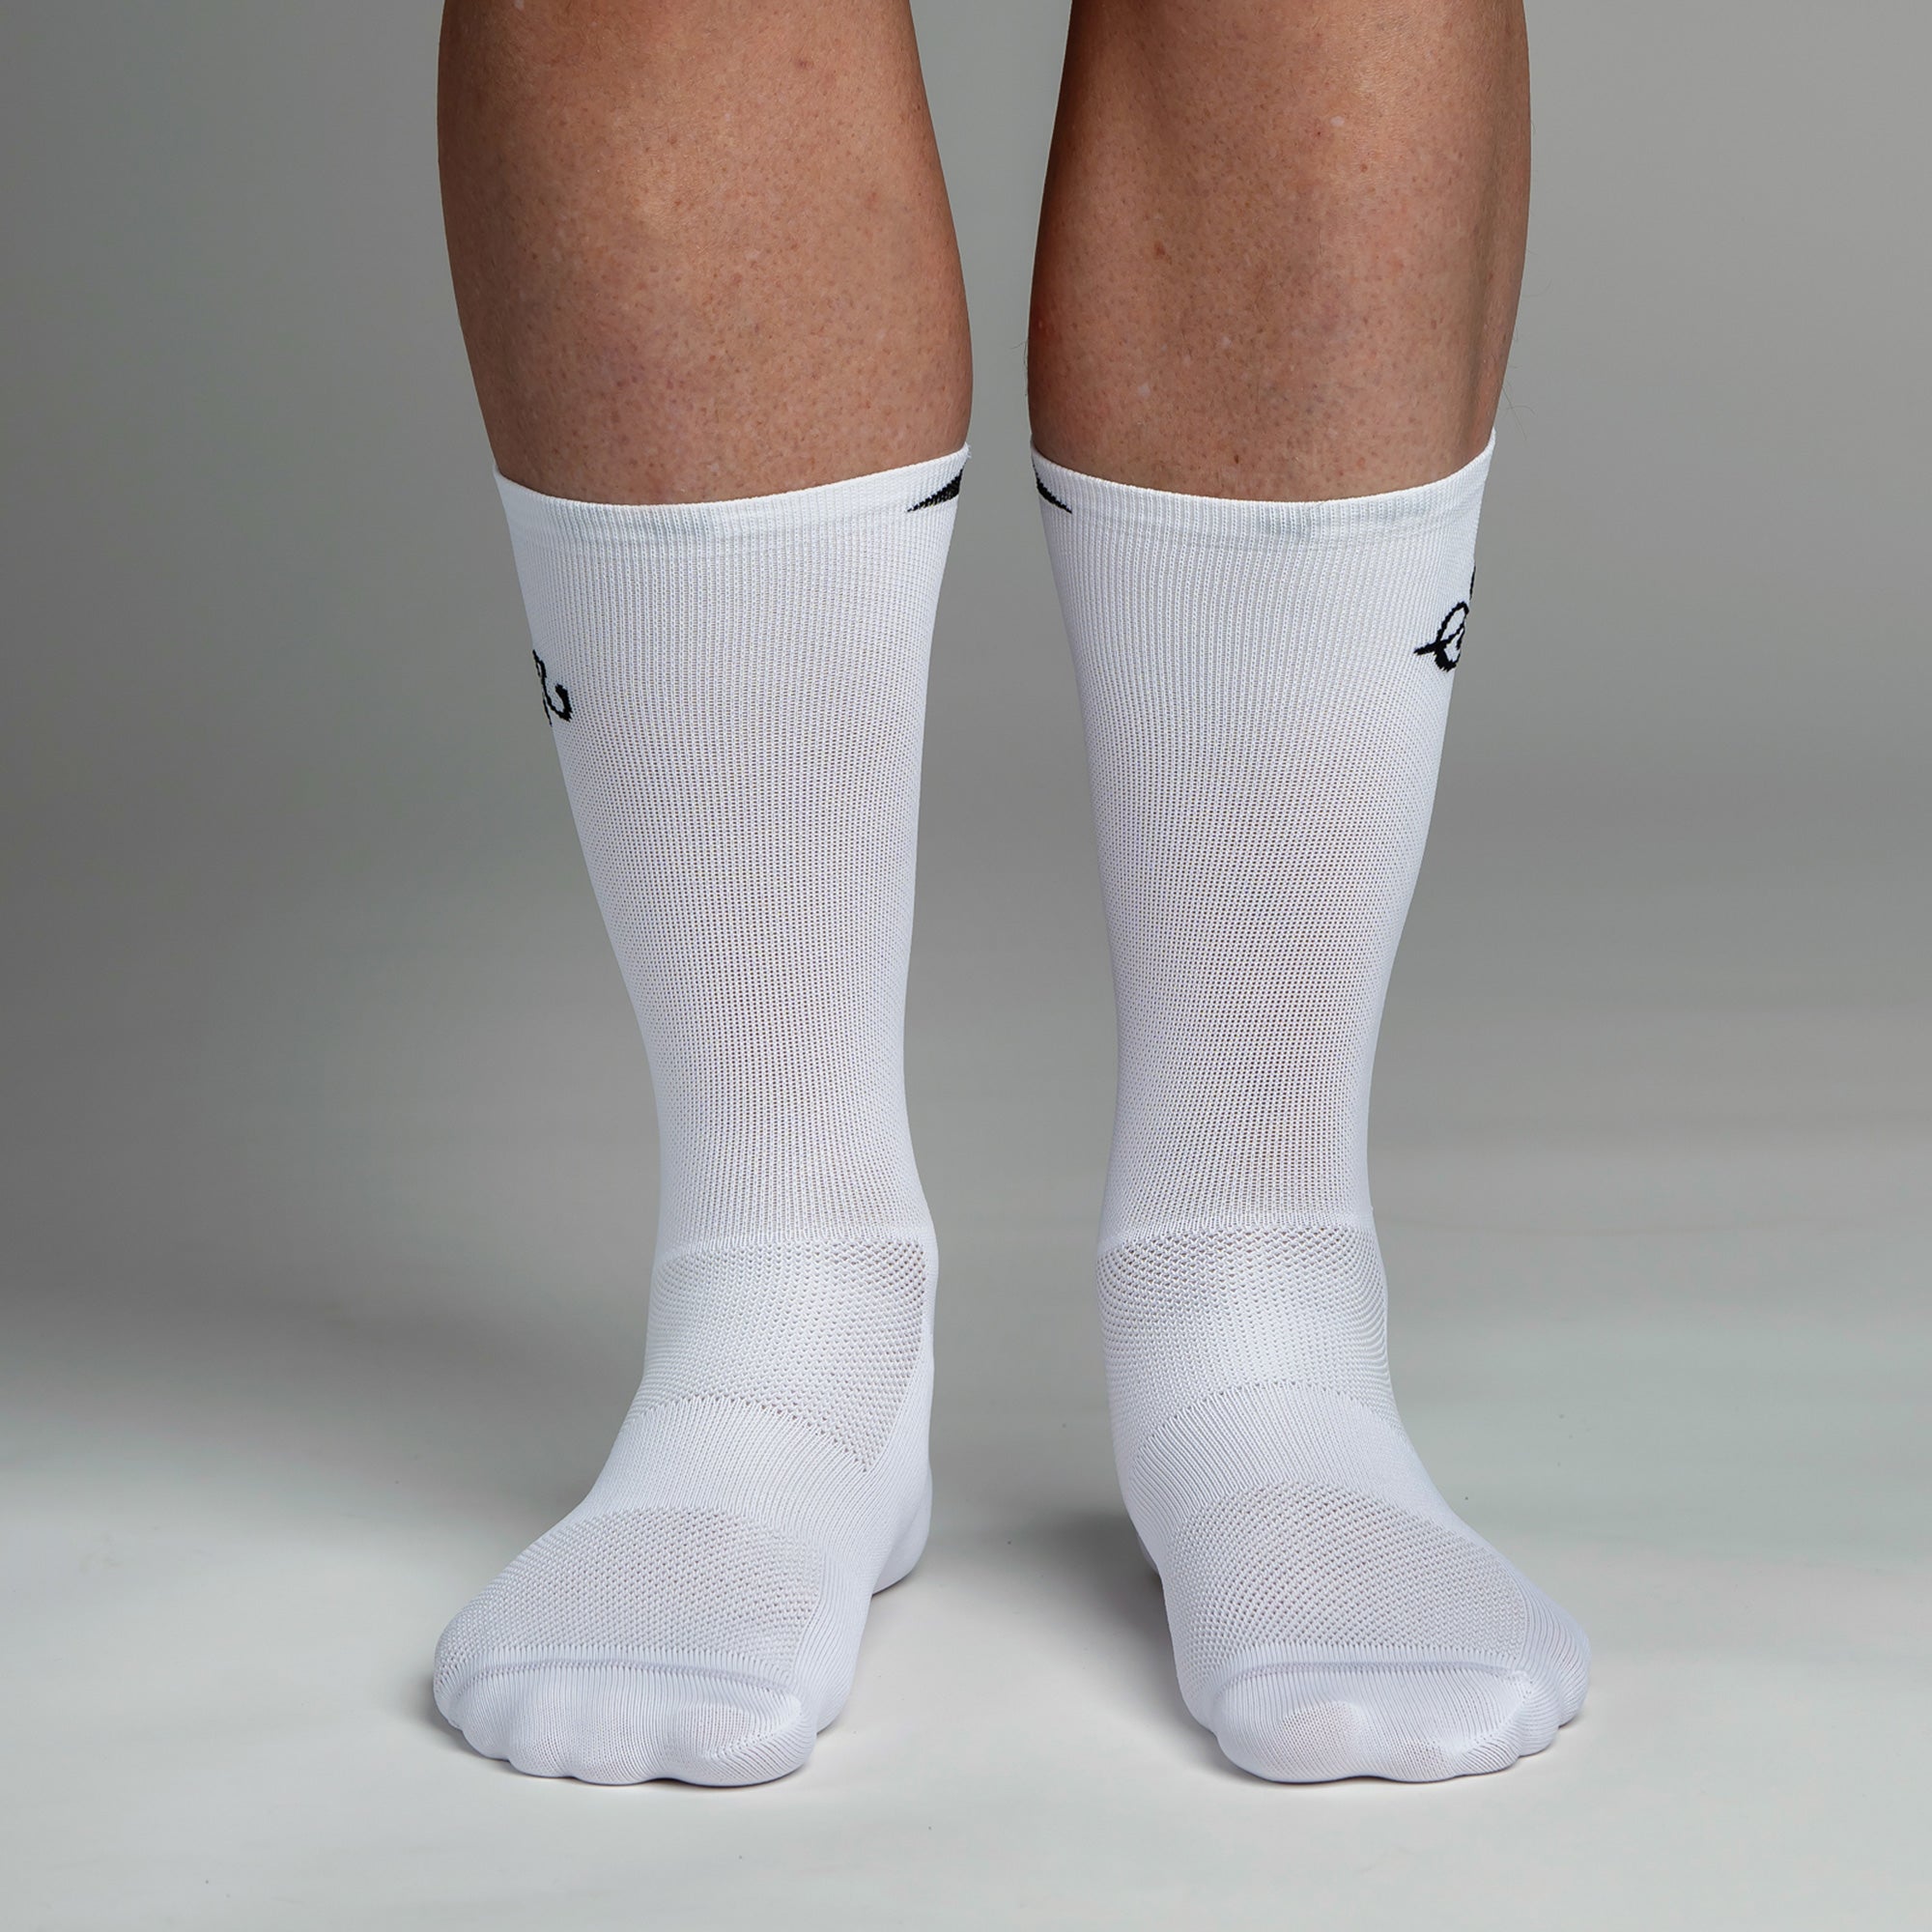 Snok - White Road Cycling Socks for Men - Pack of 2 pairs